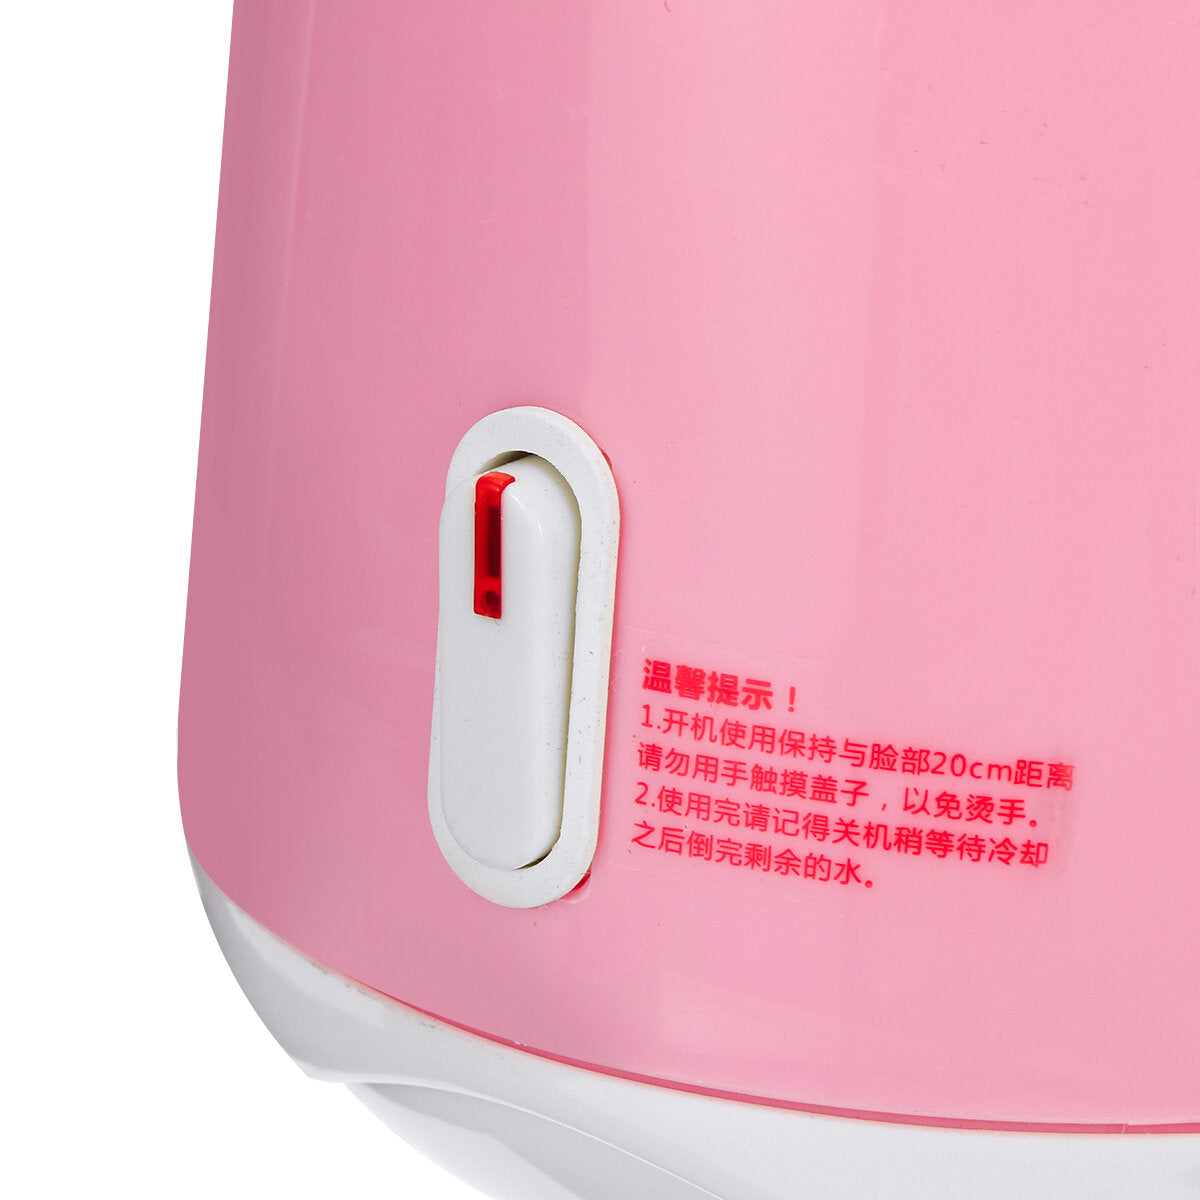 Nano Spray Water Meter Face Steamer Beauty Instrument Household Hot Spray Steaming Humidifier 220V